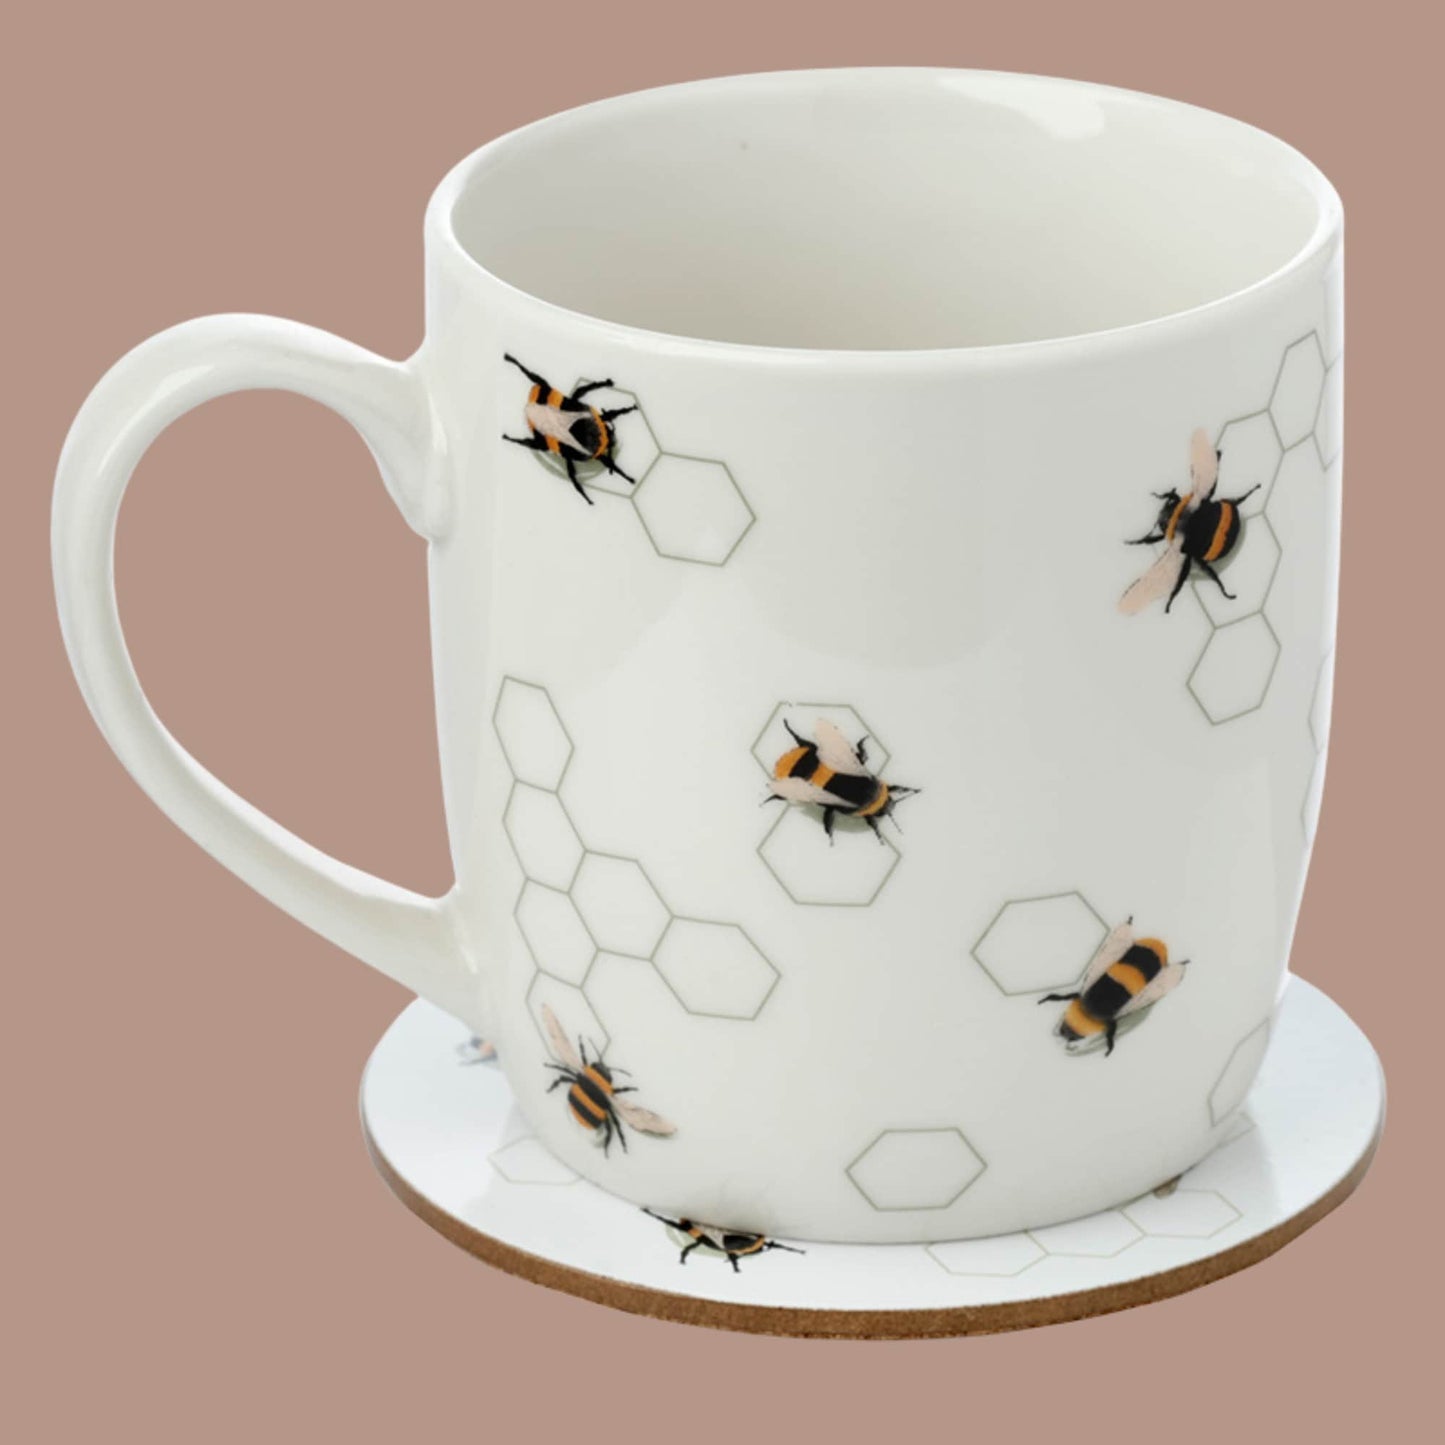 Honey Bee Porcelain Mug And Coaster Set Honey Bee Mug With Coaster Bee Lover Cup And Coaster Set Gift Set Fun Christmas Gift Bee Lover Gift